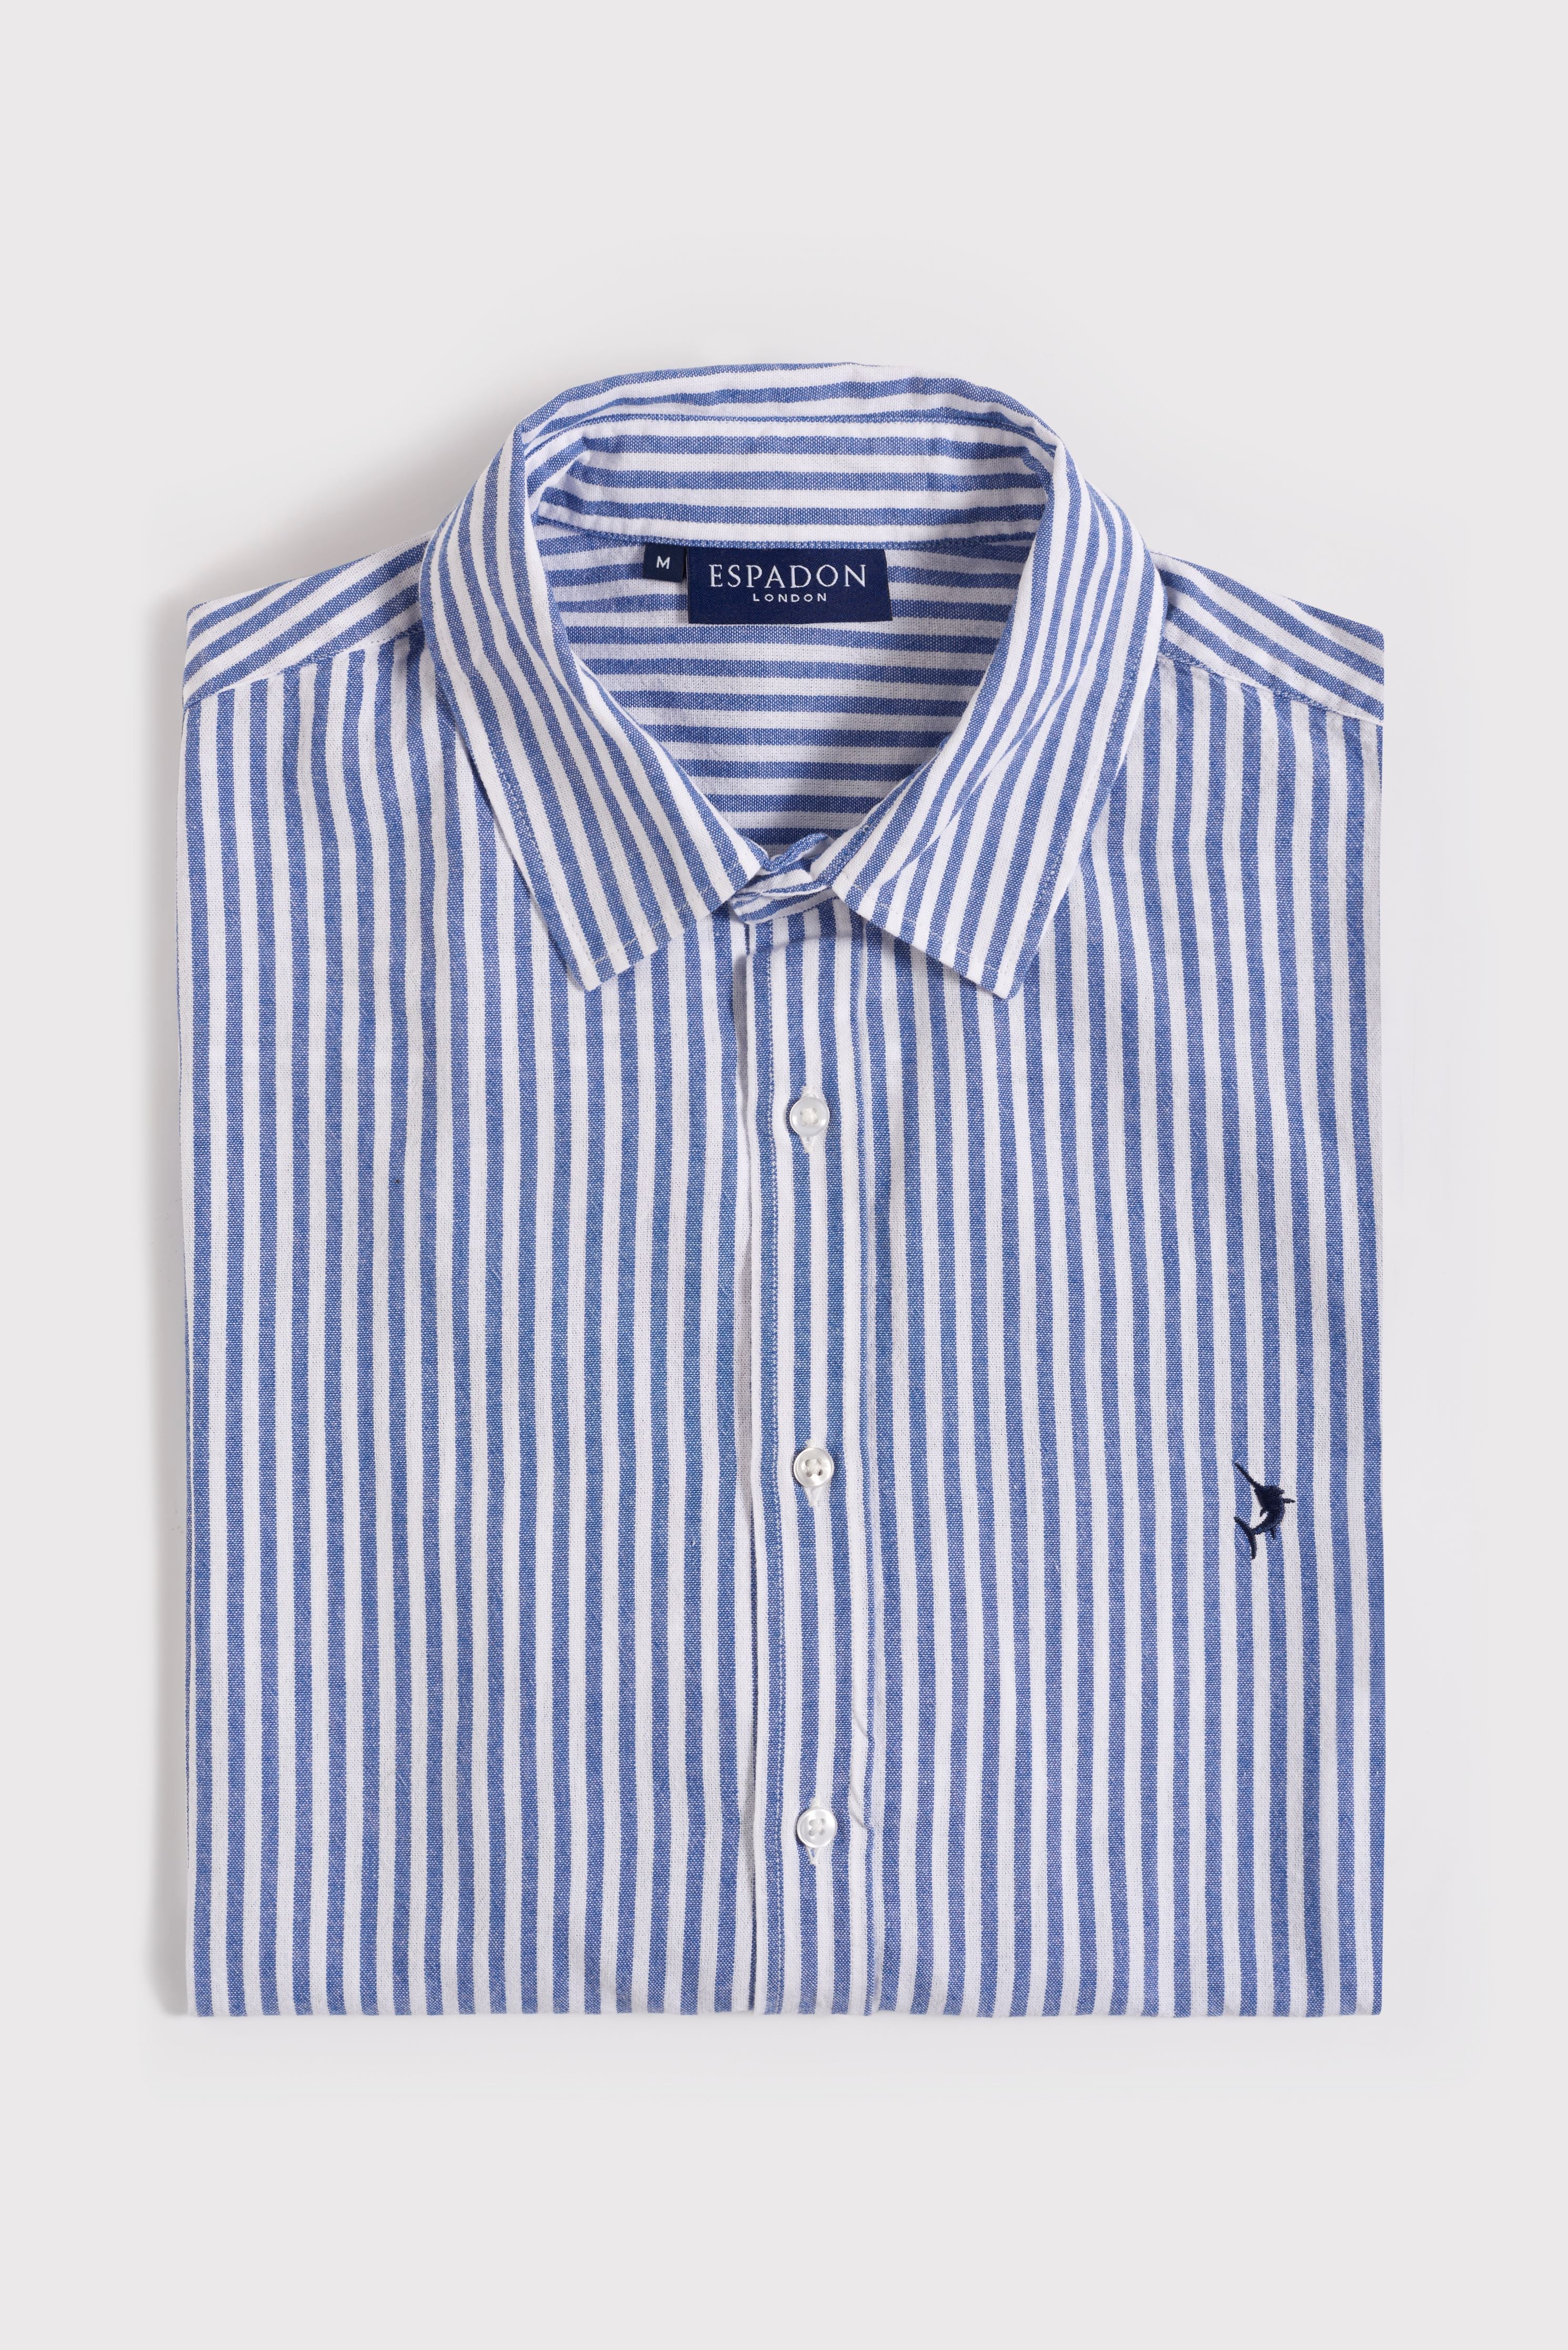 Espadon Striped Cotton Shirt - Navy